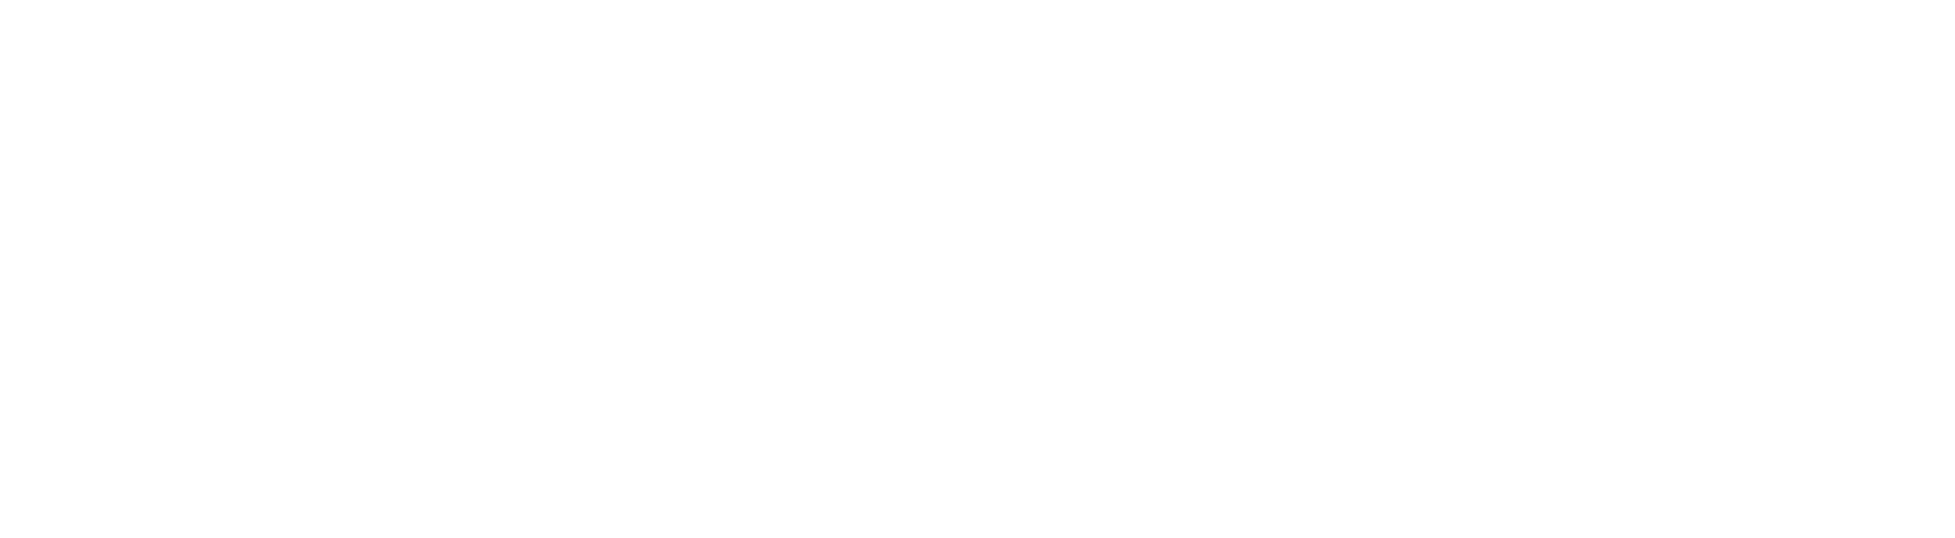 Law Office of J.J. Talbott